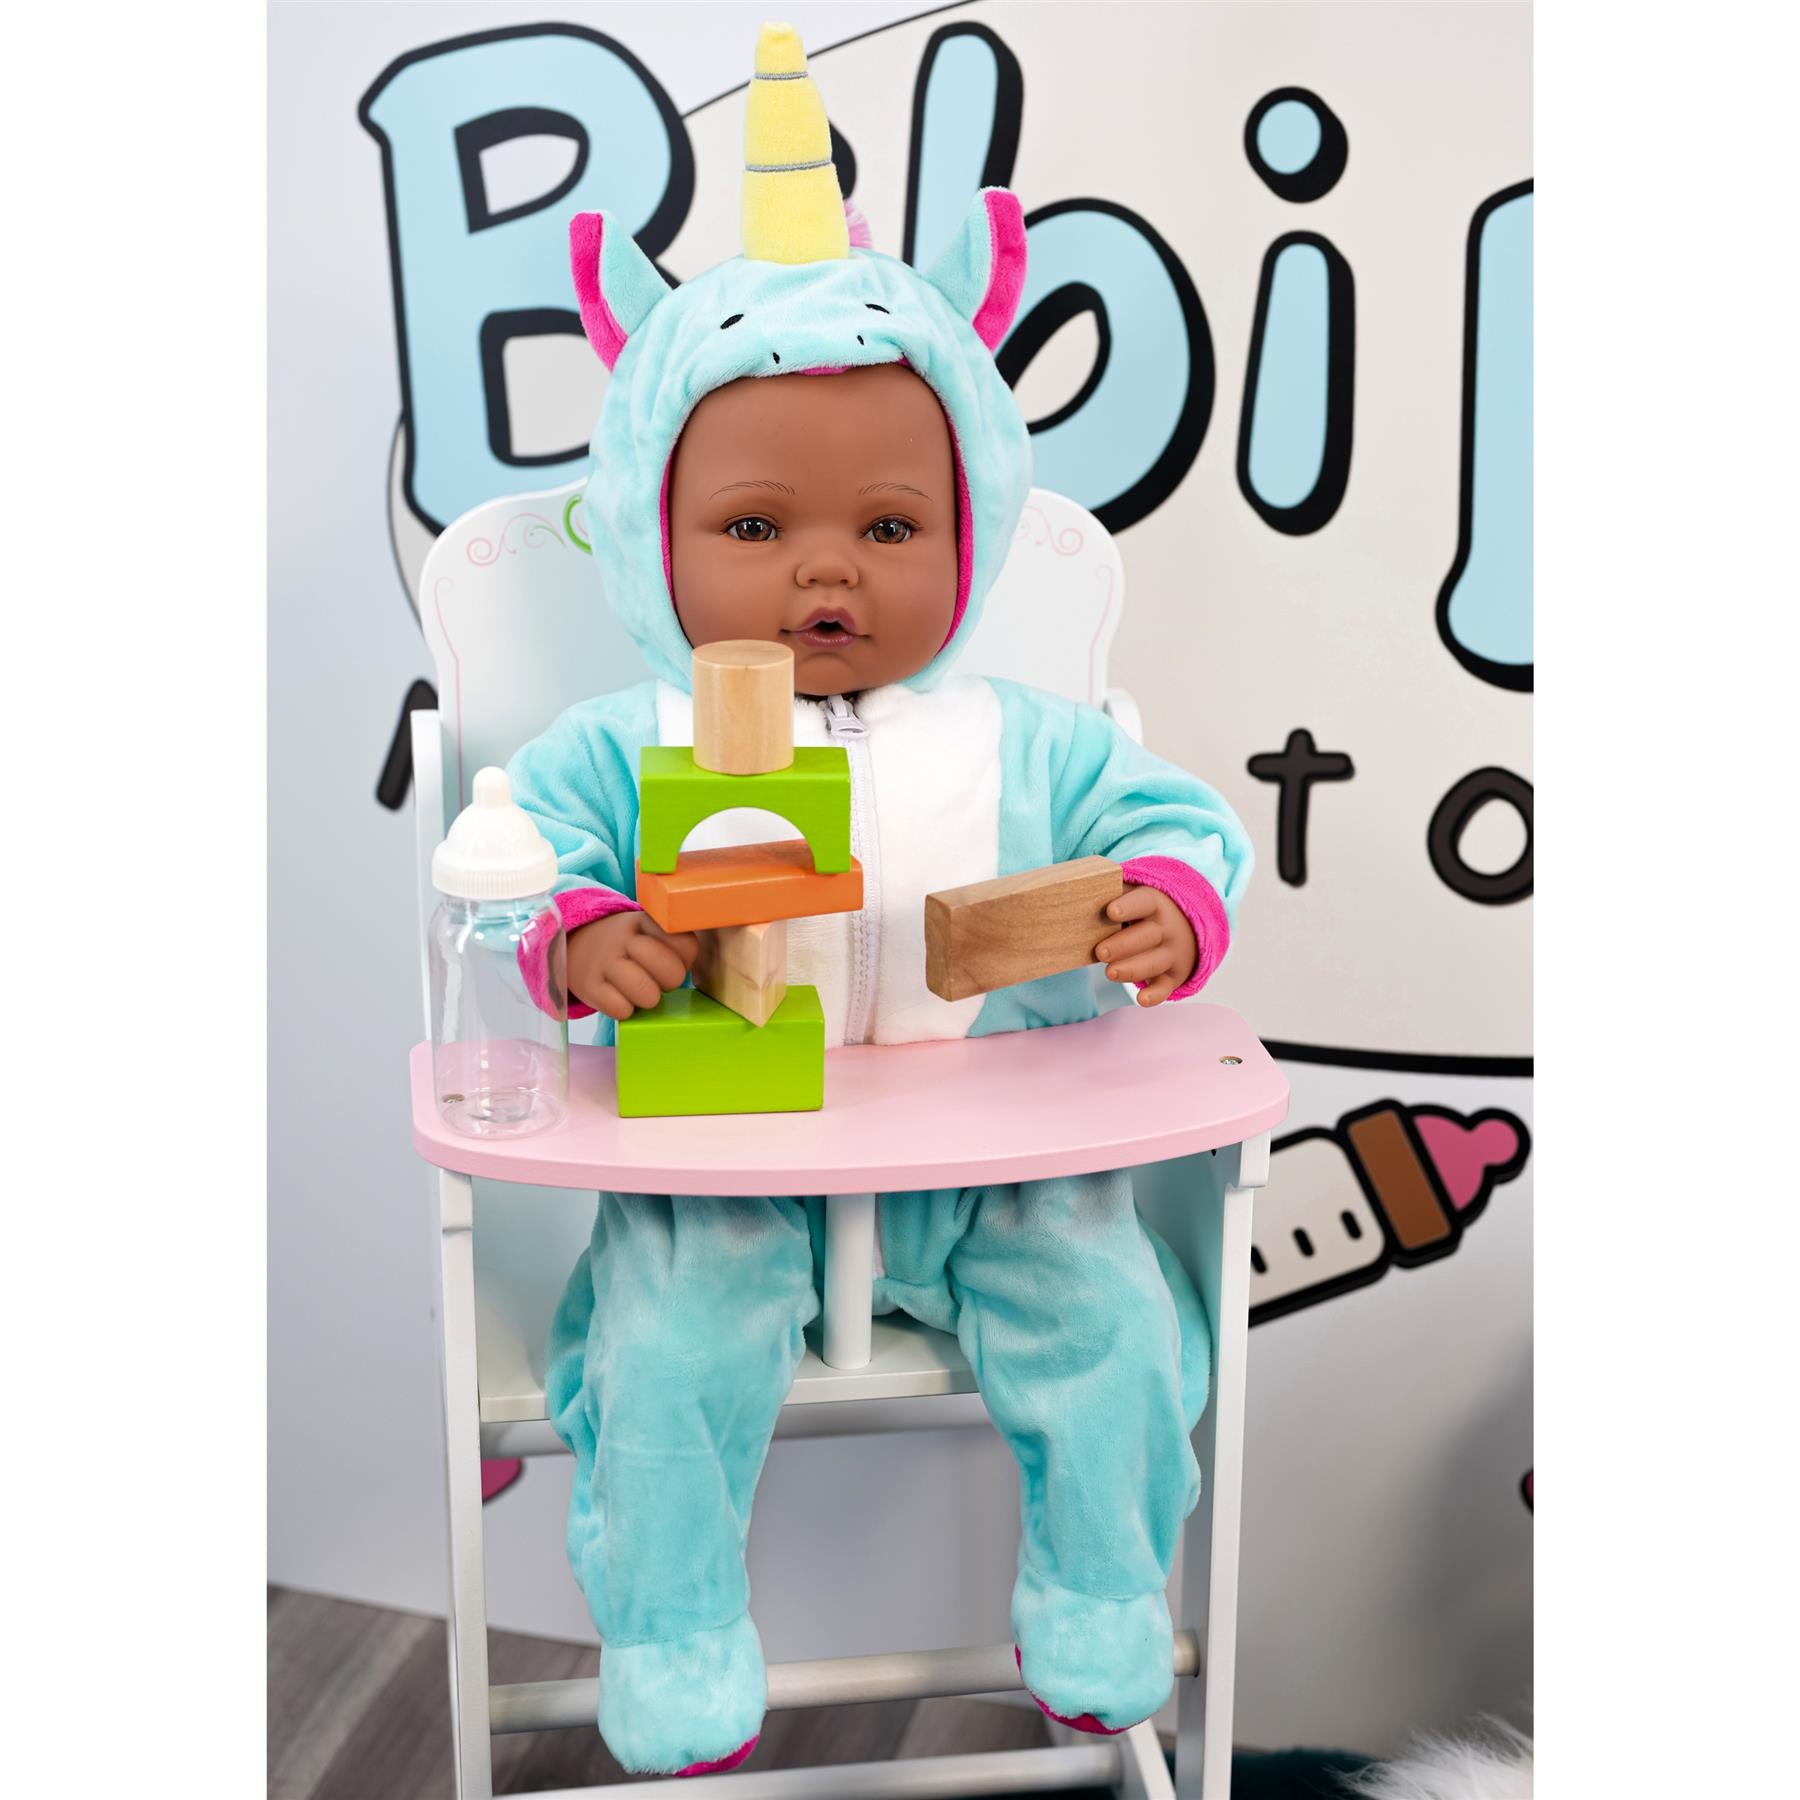 BiBi Outfits - Reborn Doll Clothes (Unicorn) (50 cm / 20") by BiBi Doll - The Magic Toy Shop